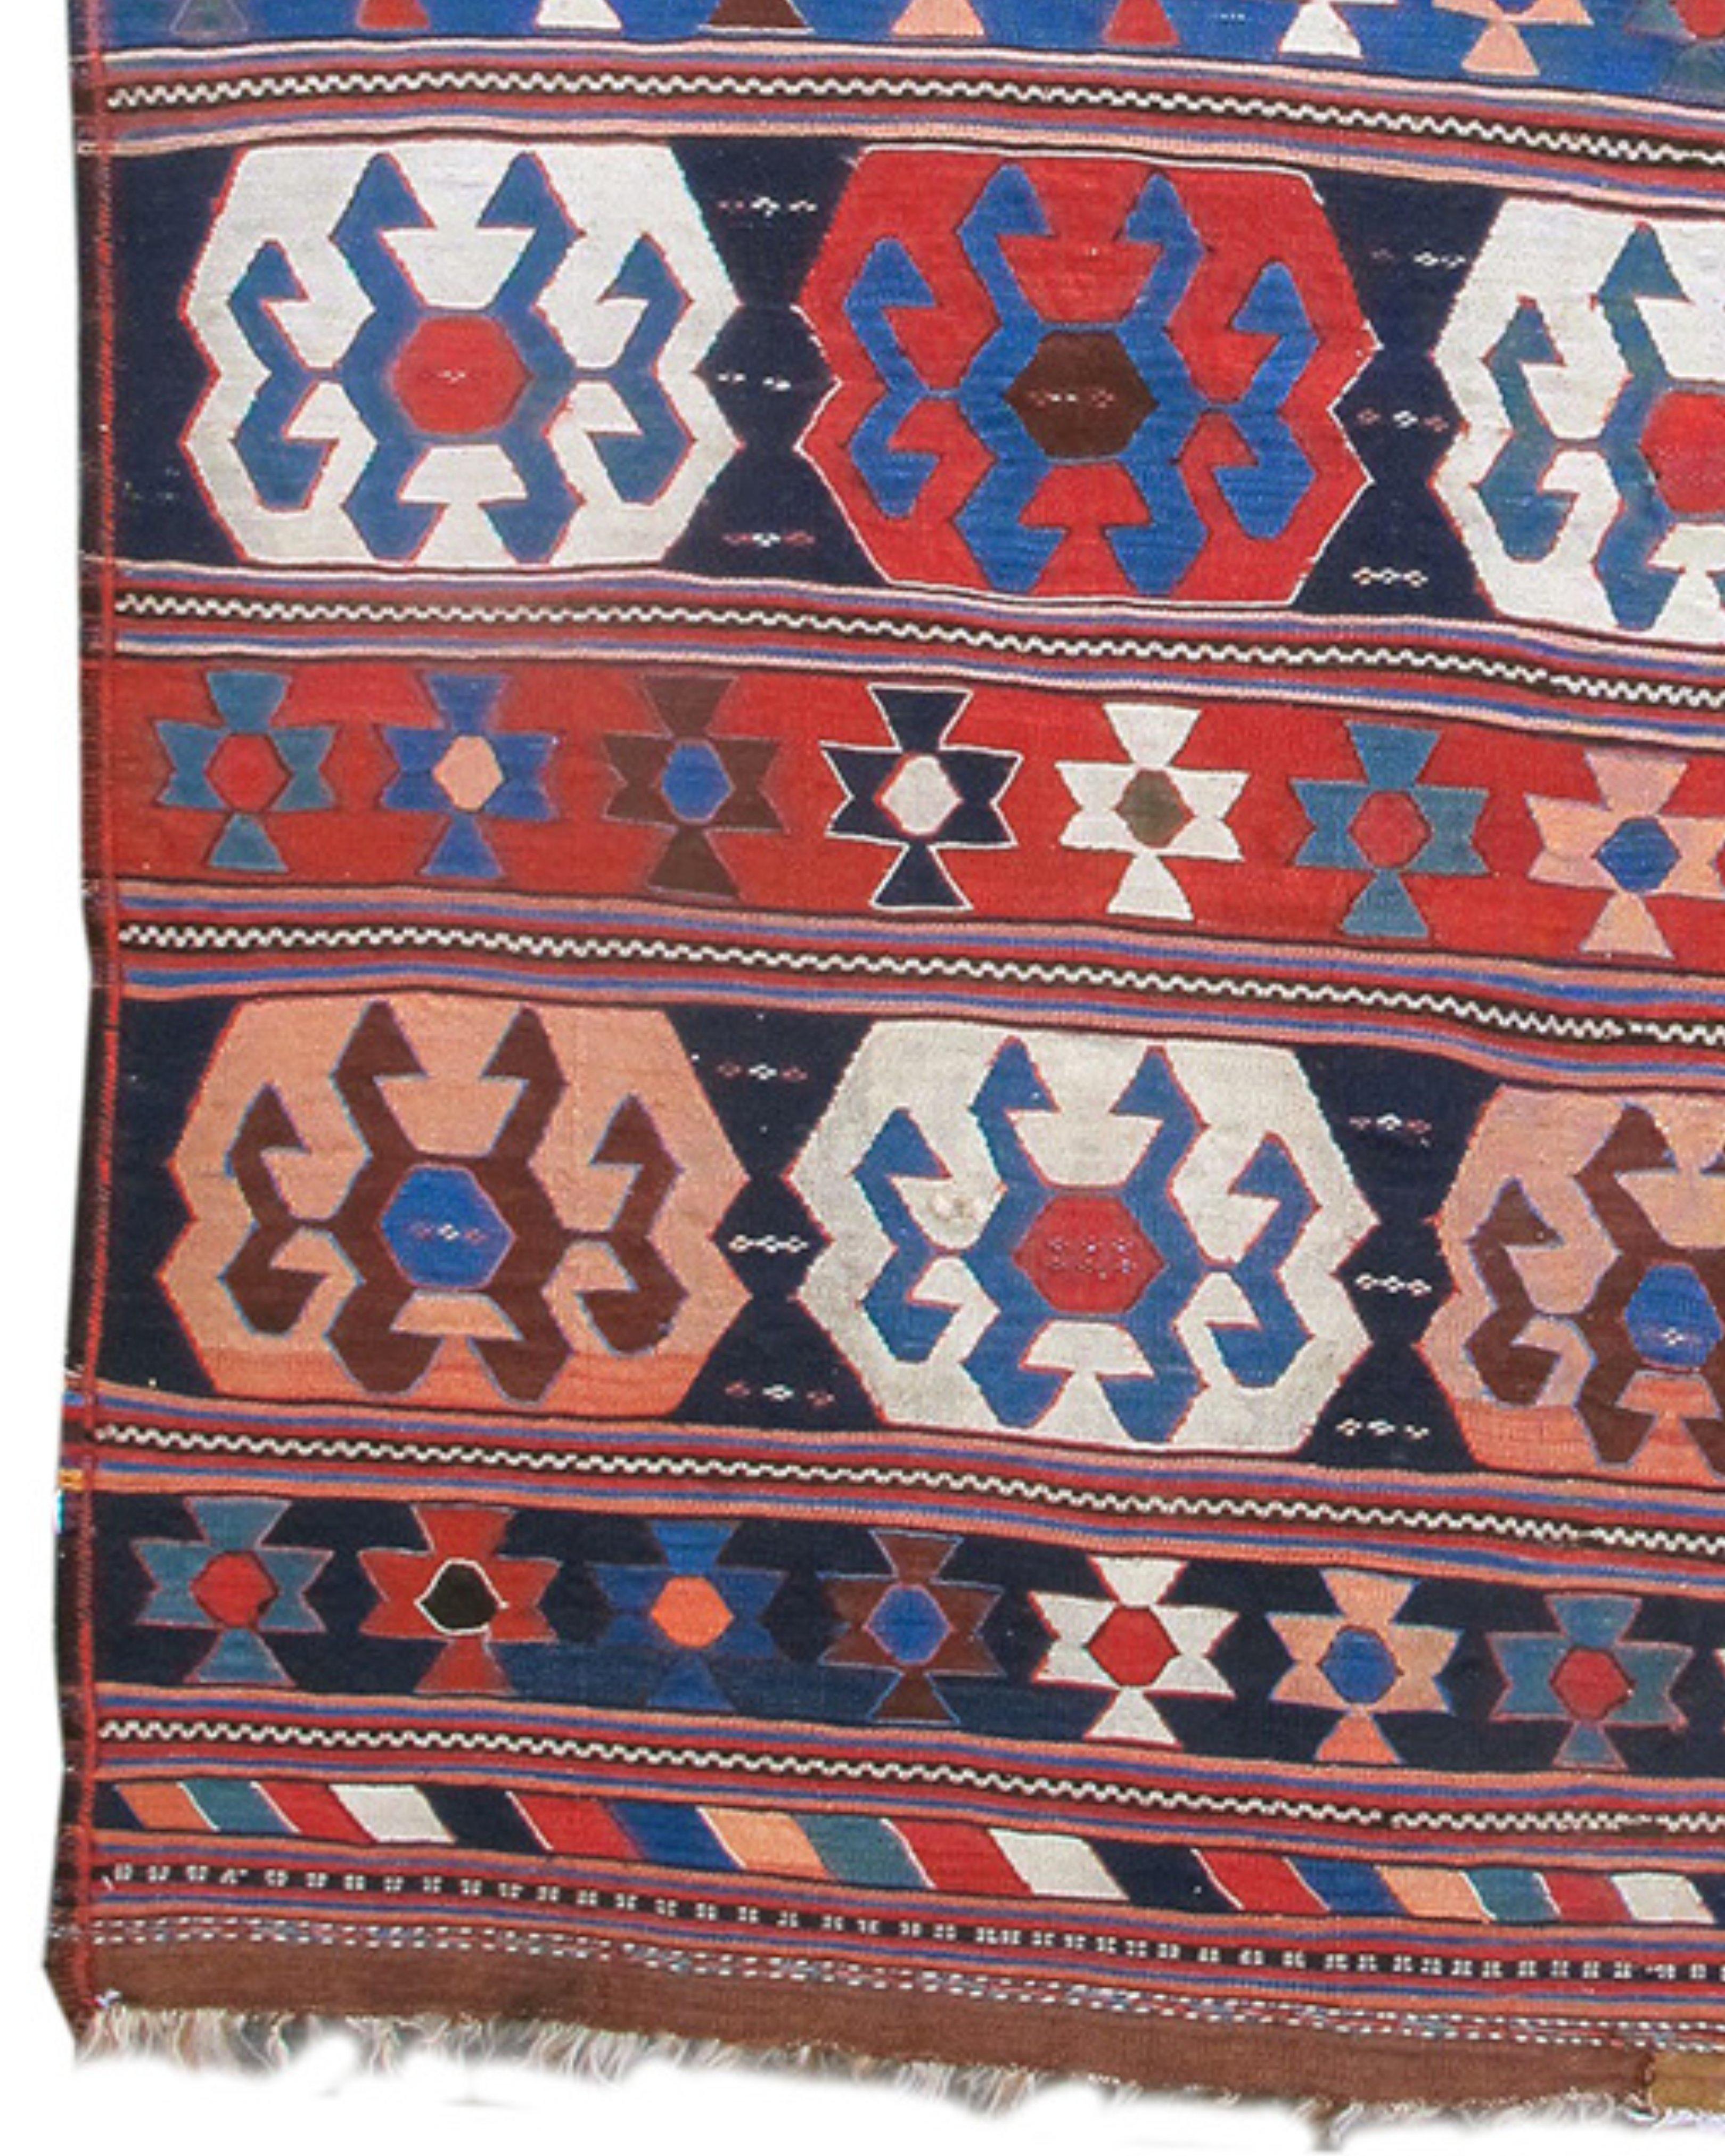 Antique Persian Veramin Kilim Rug, Late 19th Century In Excellent Condition For Sale In San Francisco, CA